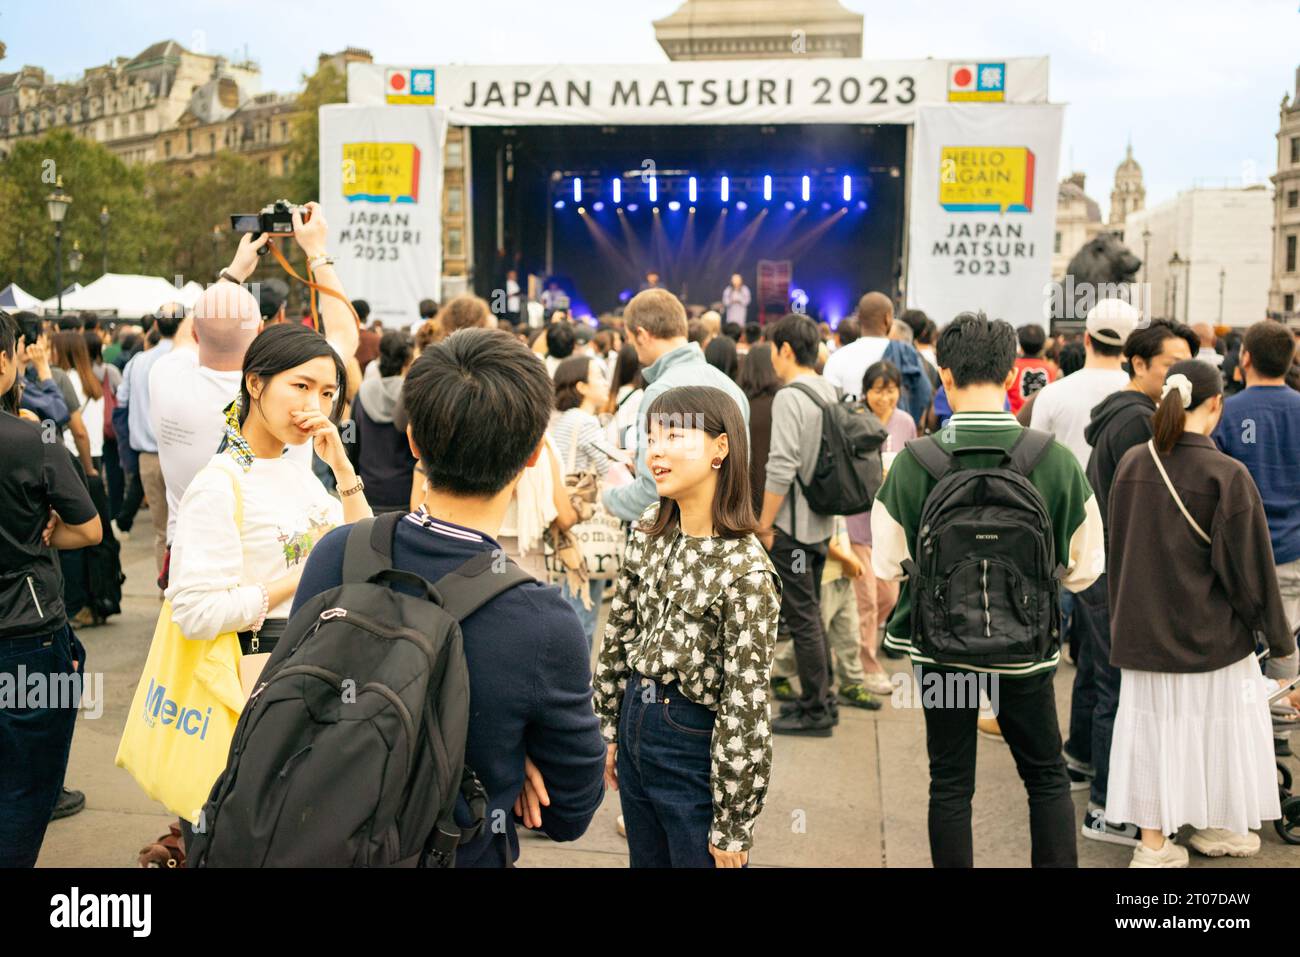 Japan Matsuri public event held in Trafalgar Square, London, England, 2023. Stock Photo